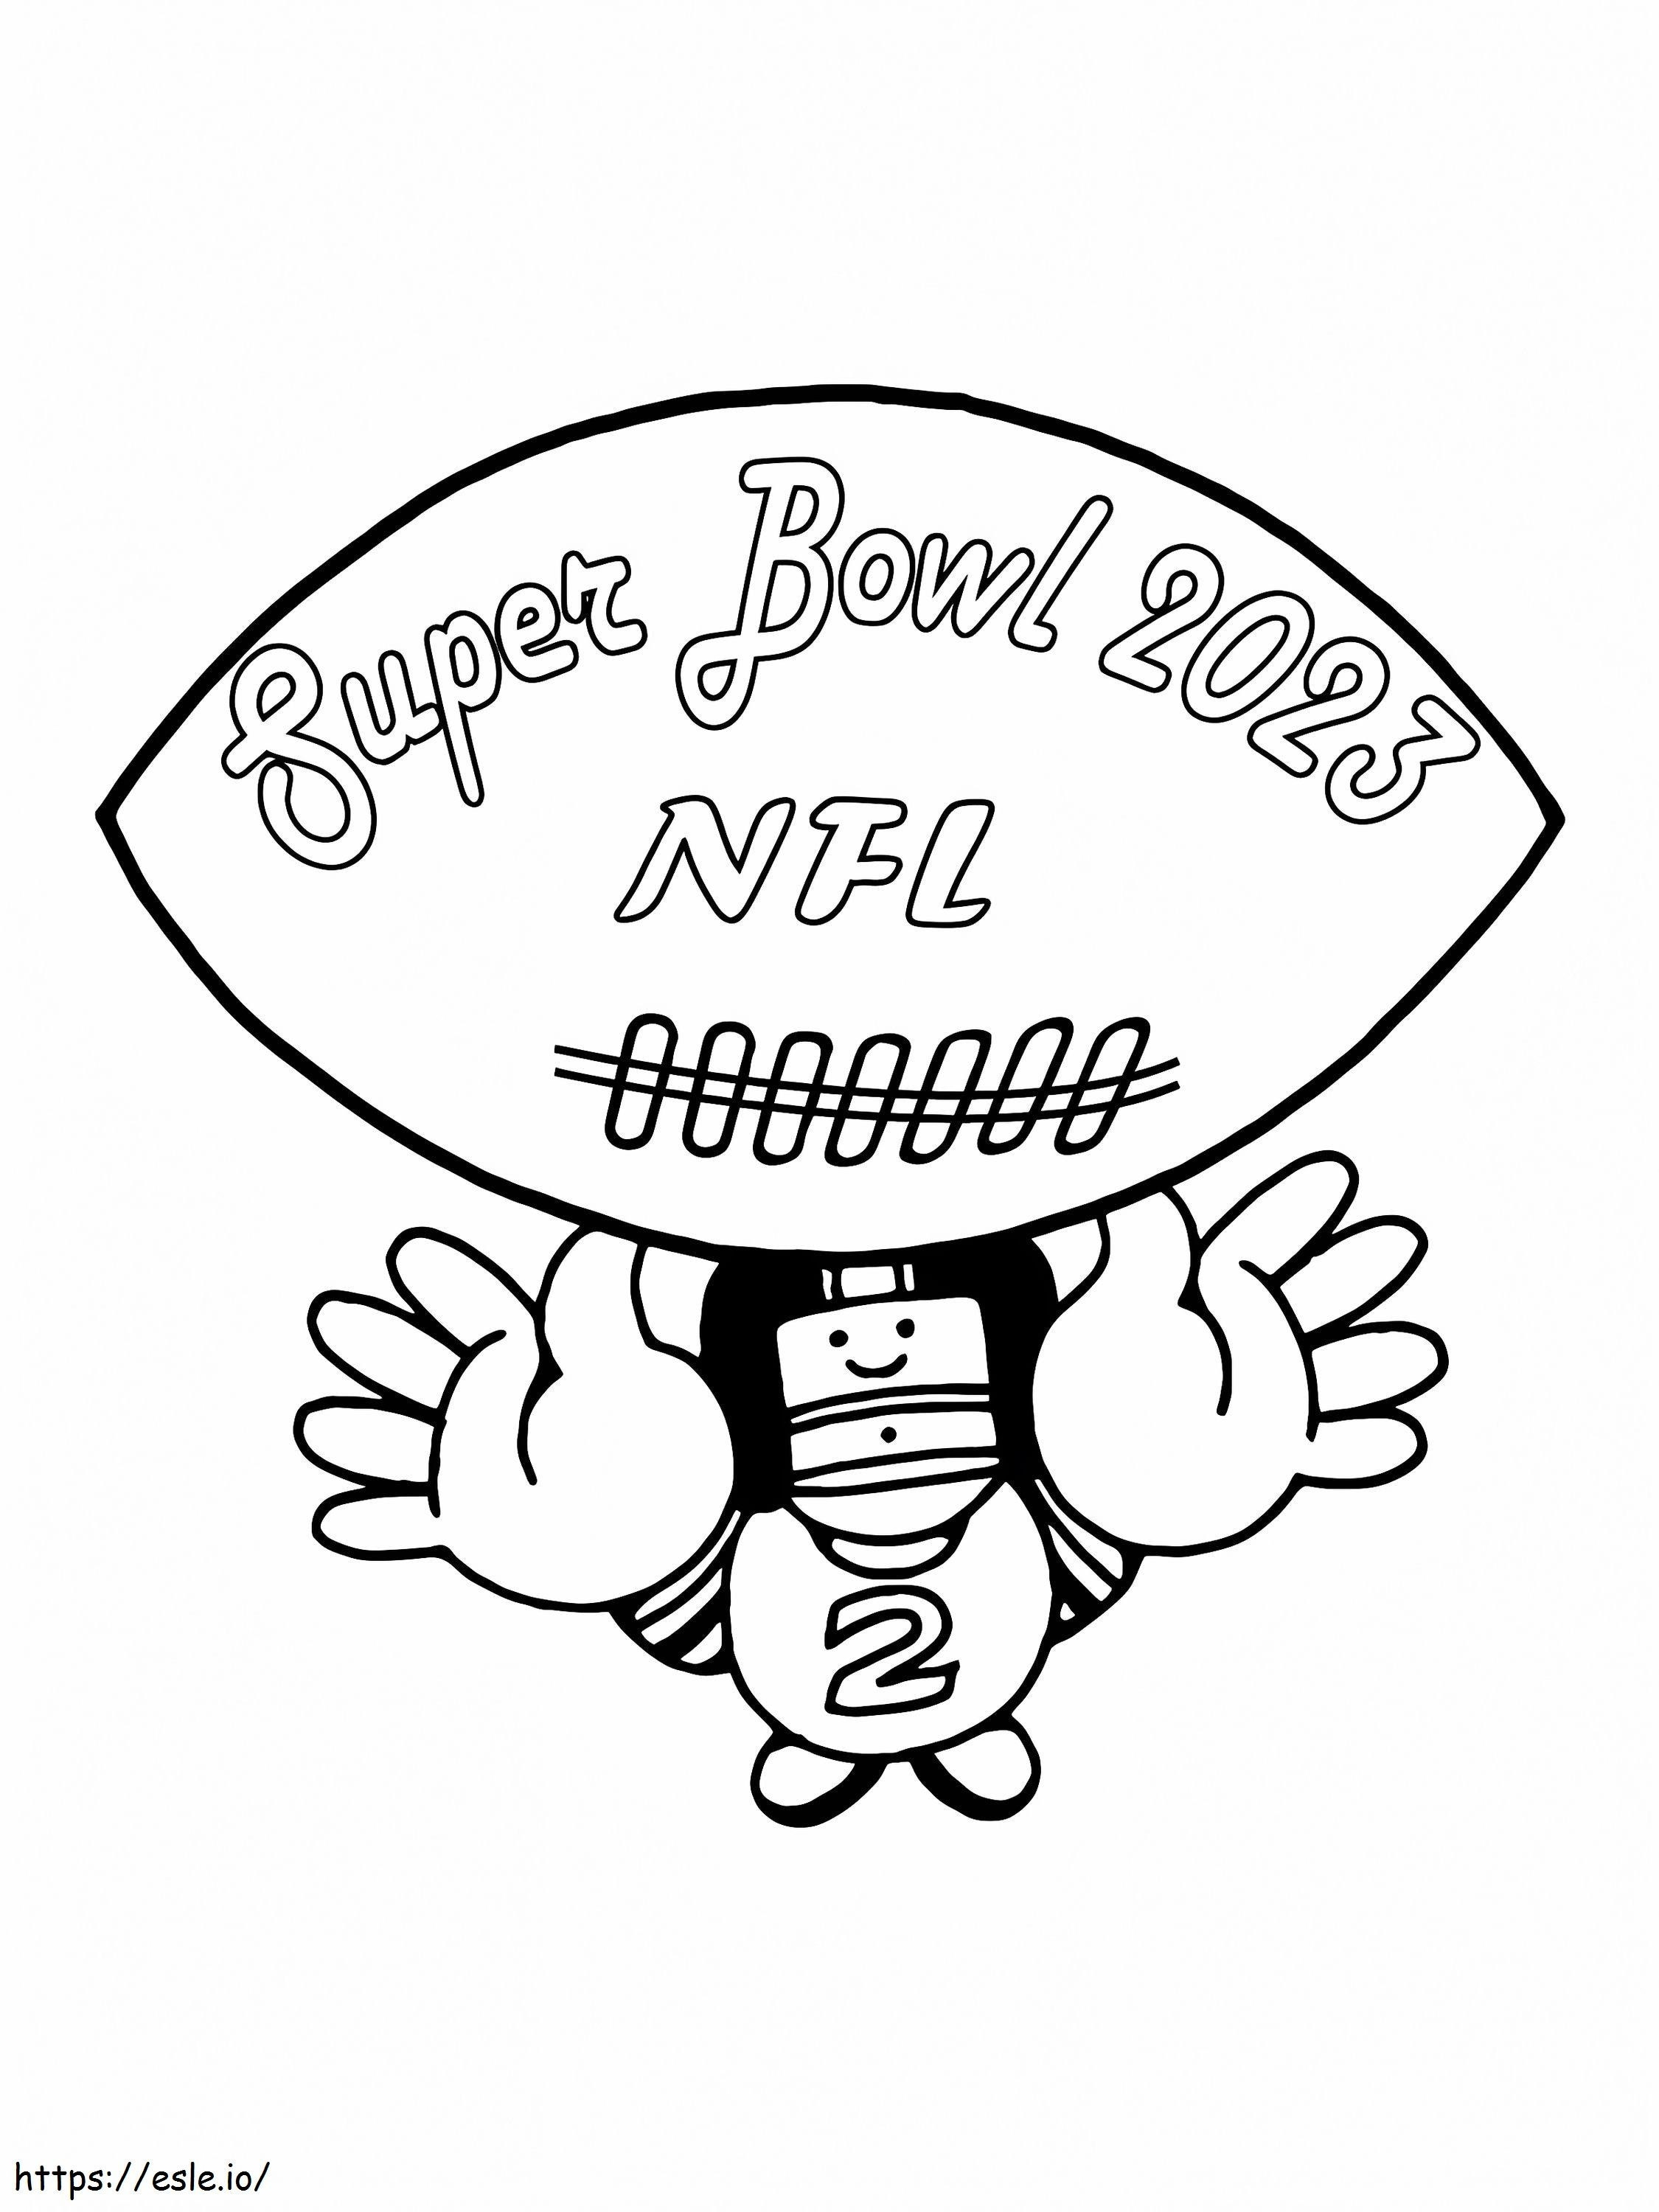 Super Bowl 2023 Nfl coloring page